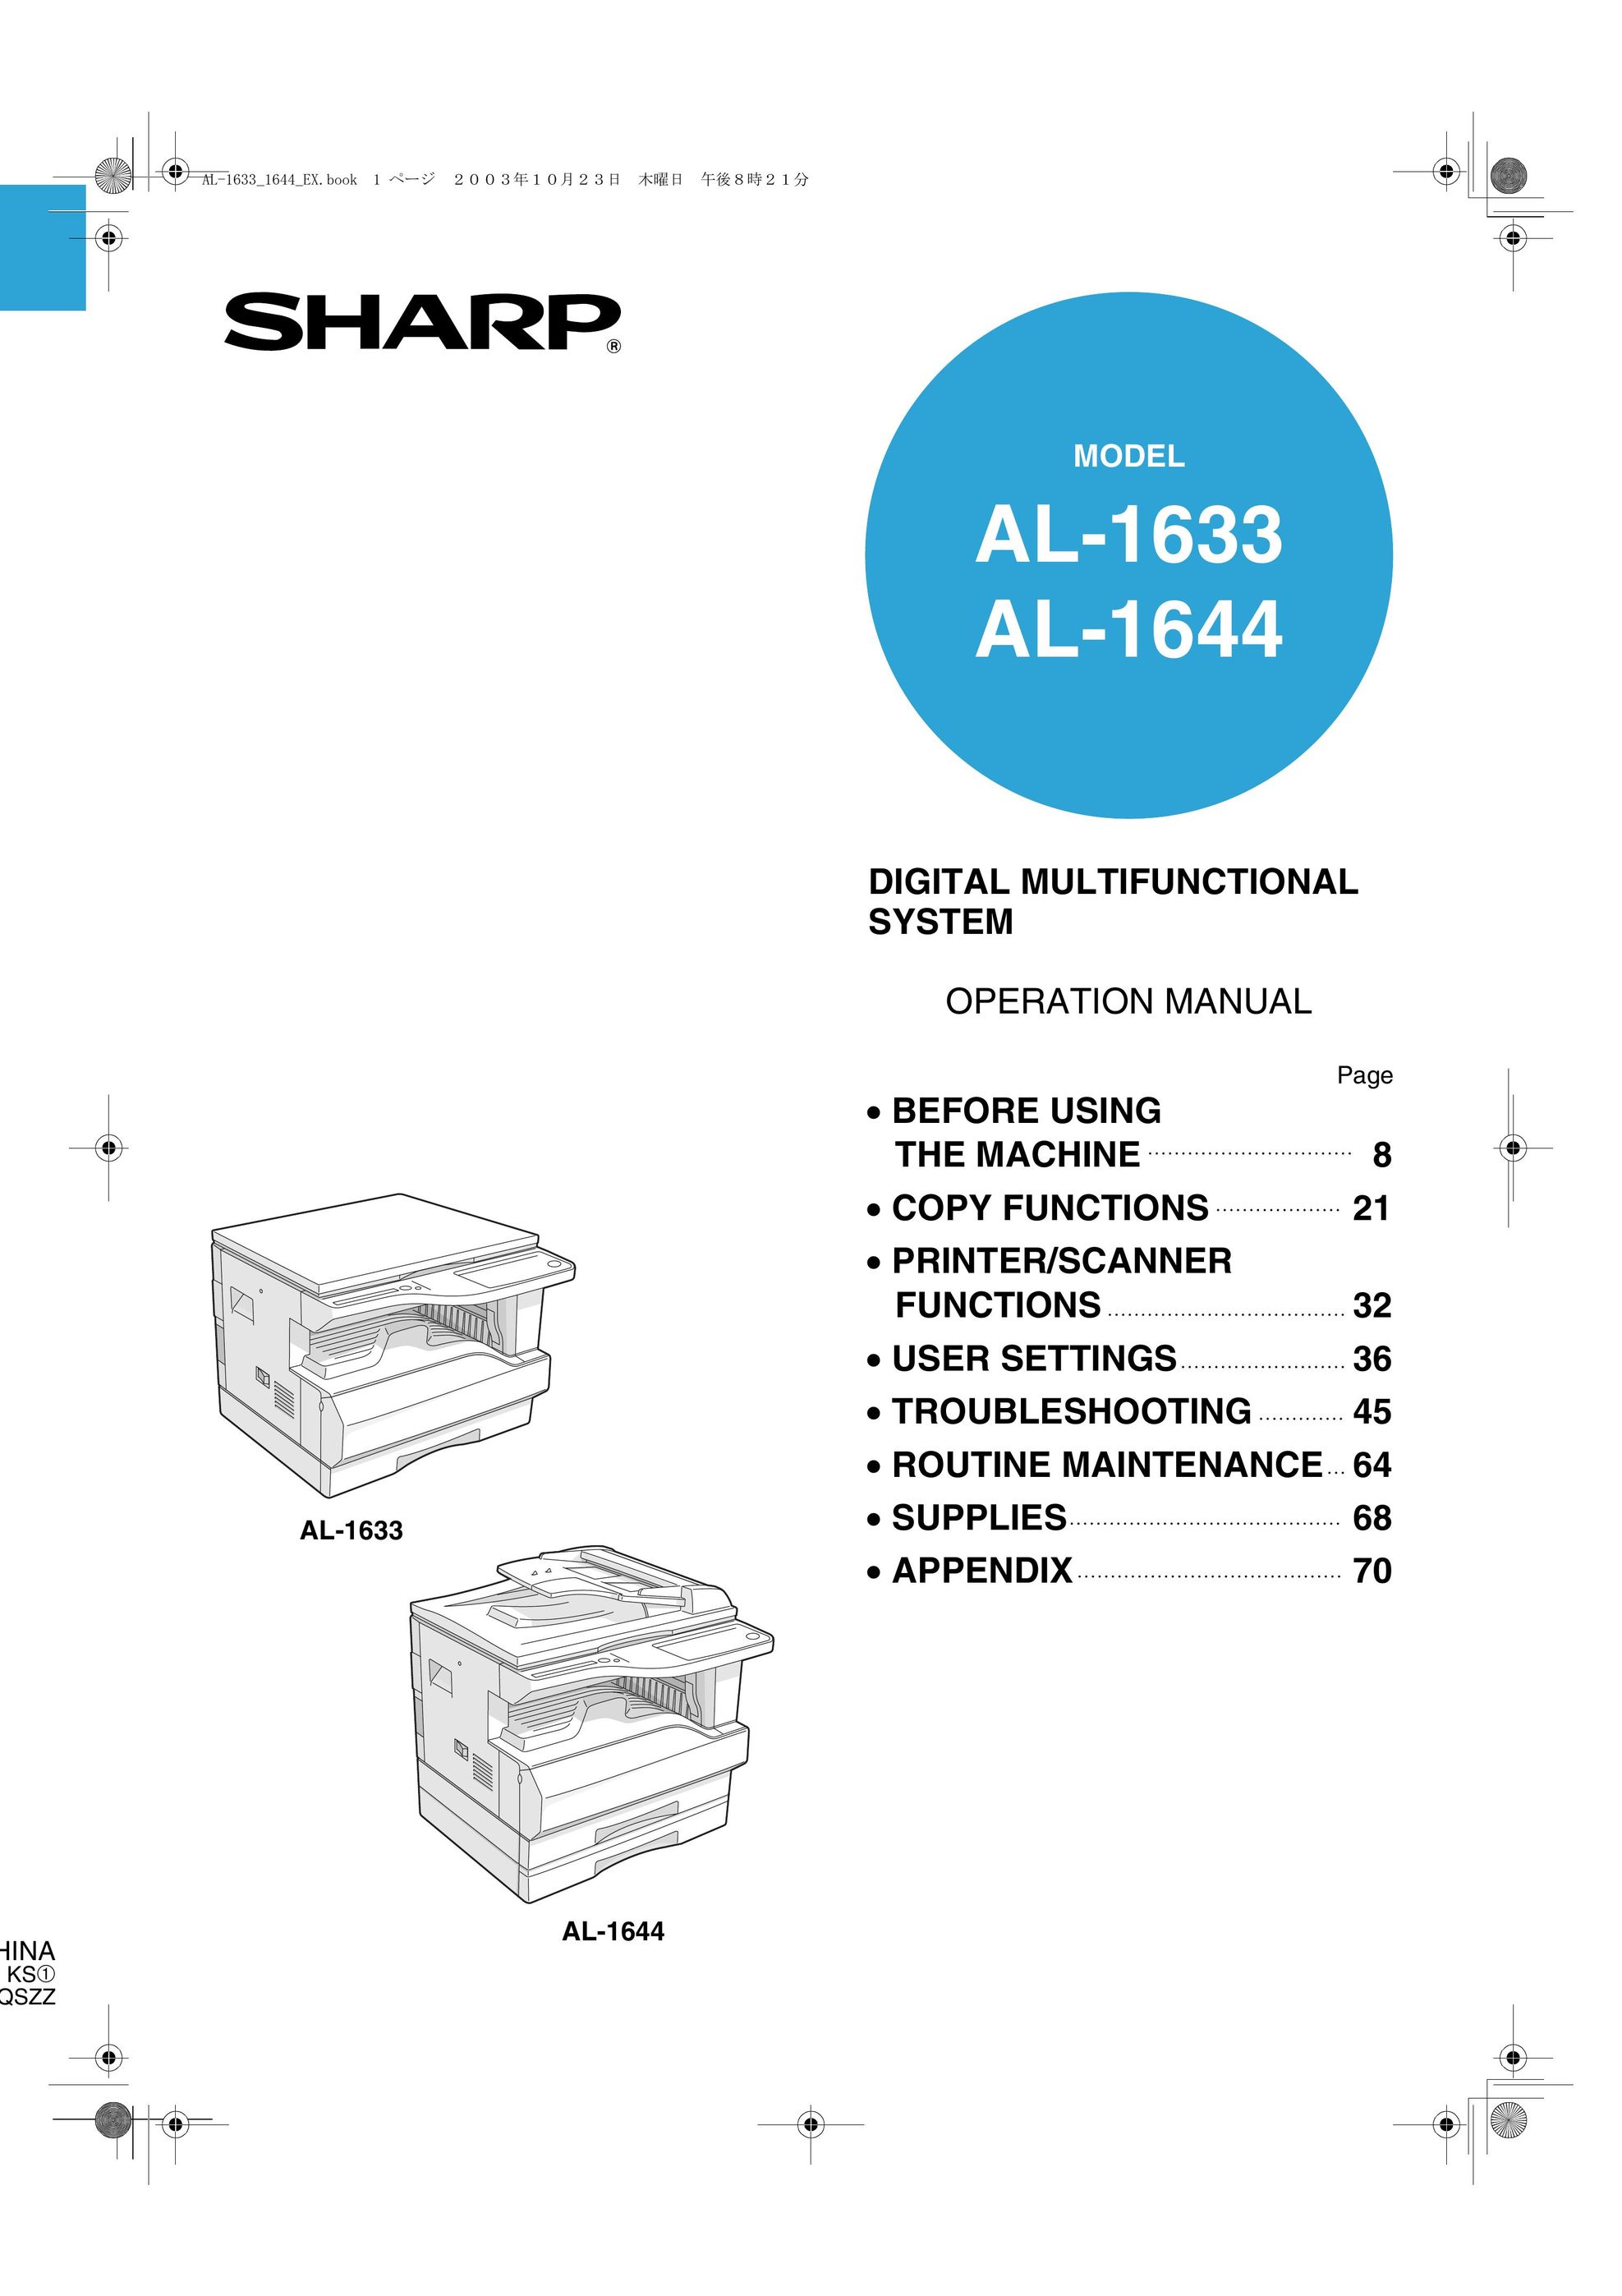 Sharp AL-1644 All in One Printer User Manual